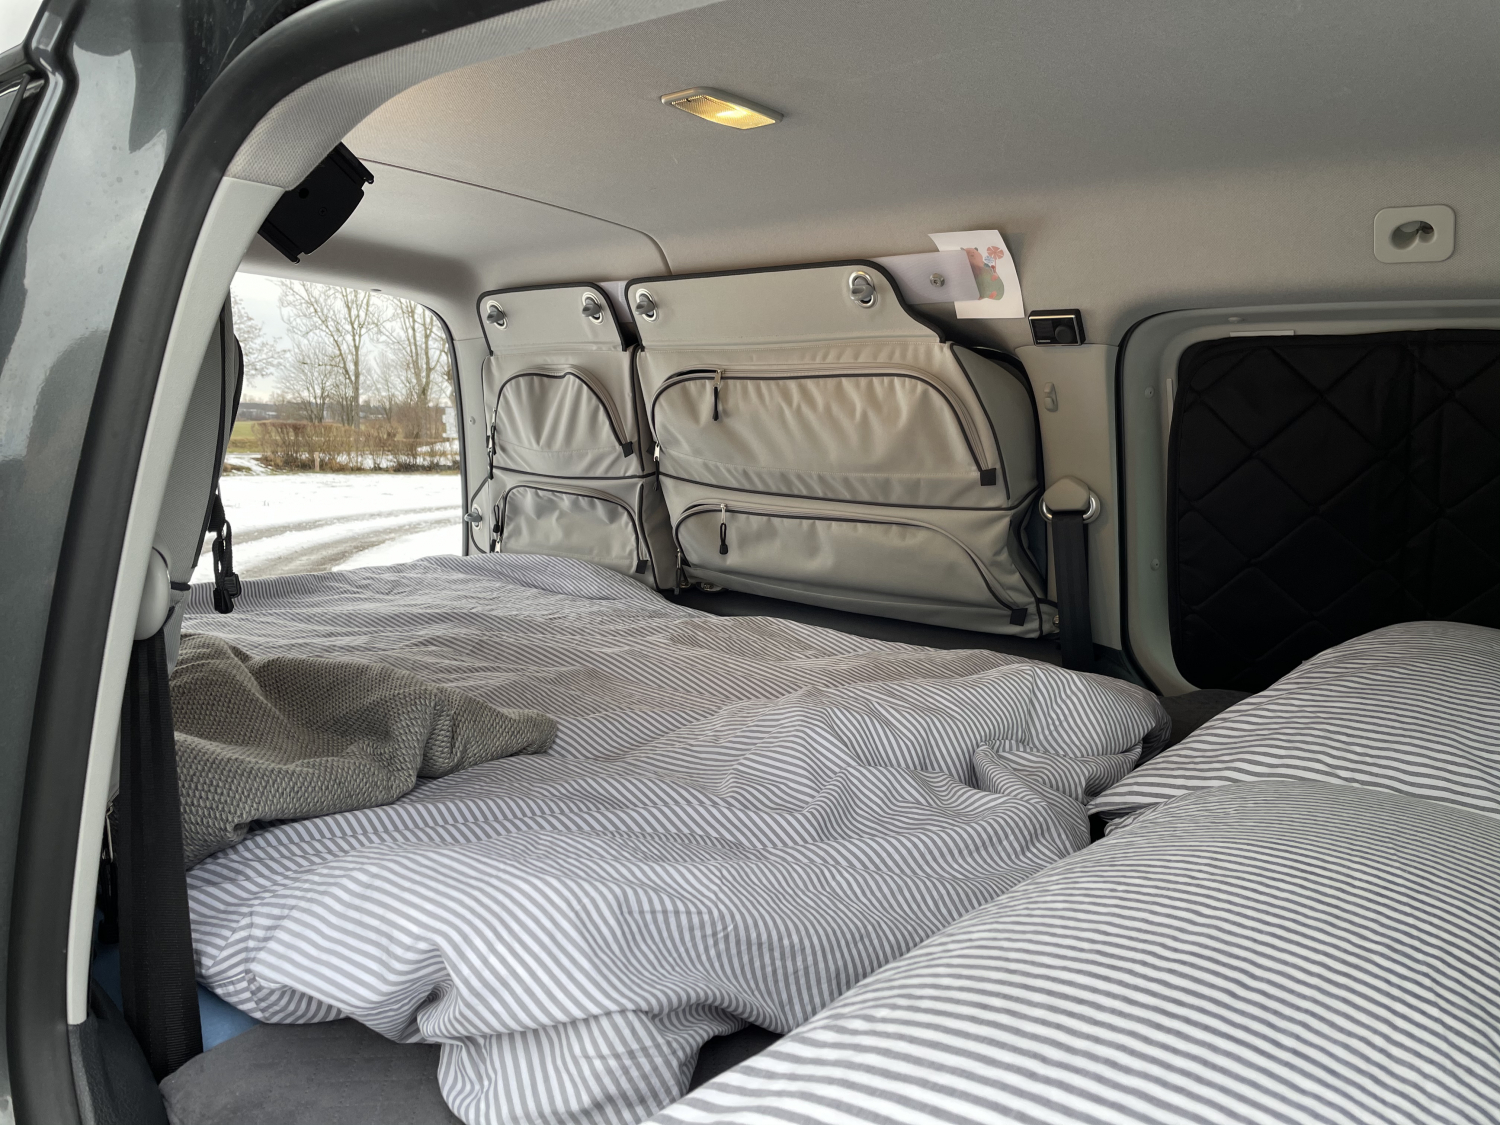 VW Caddy Maxi camper